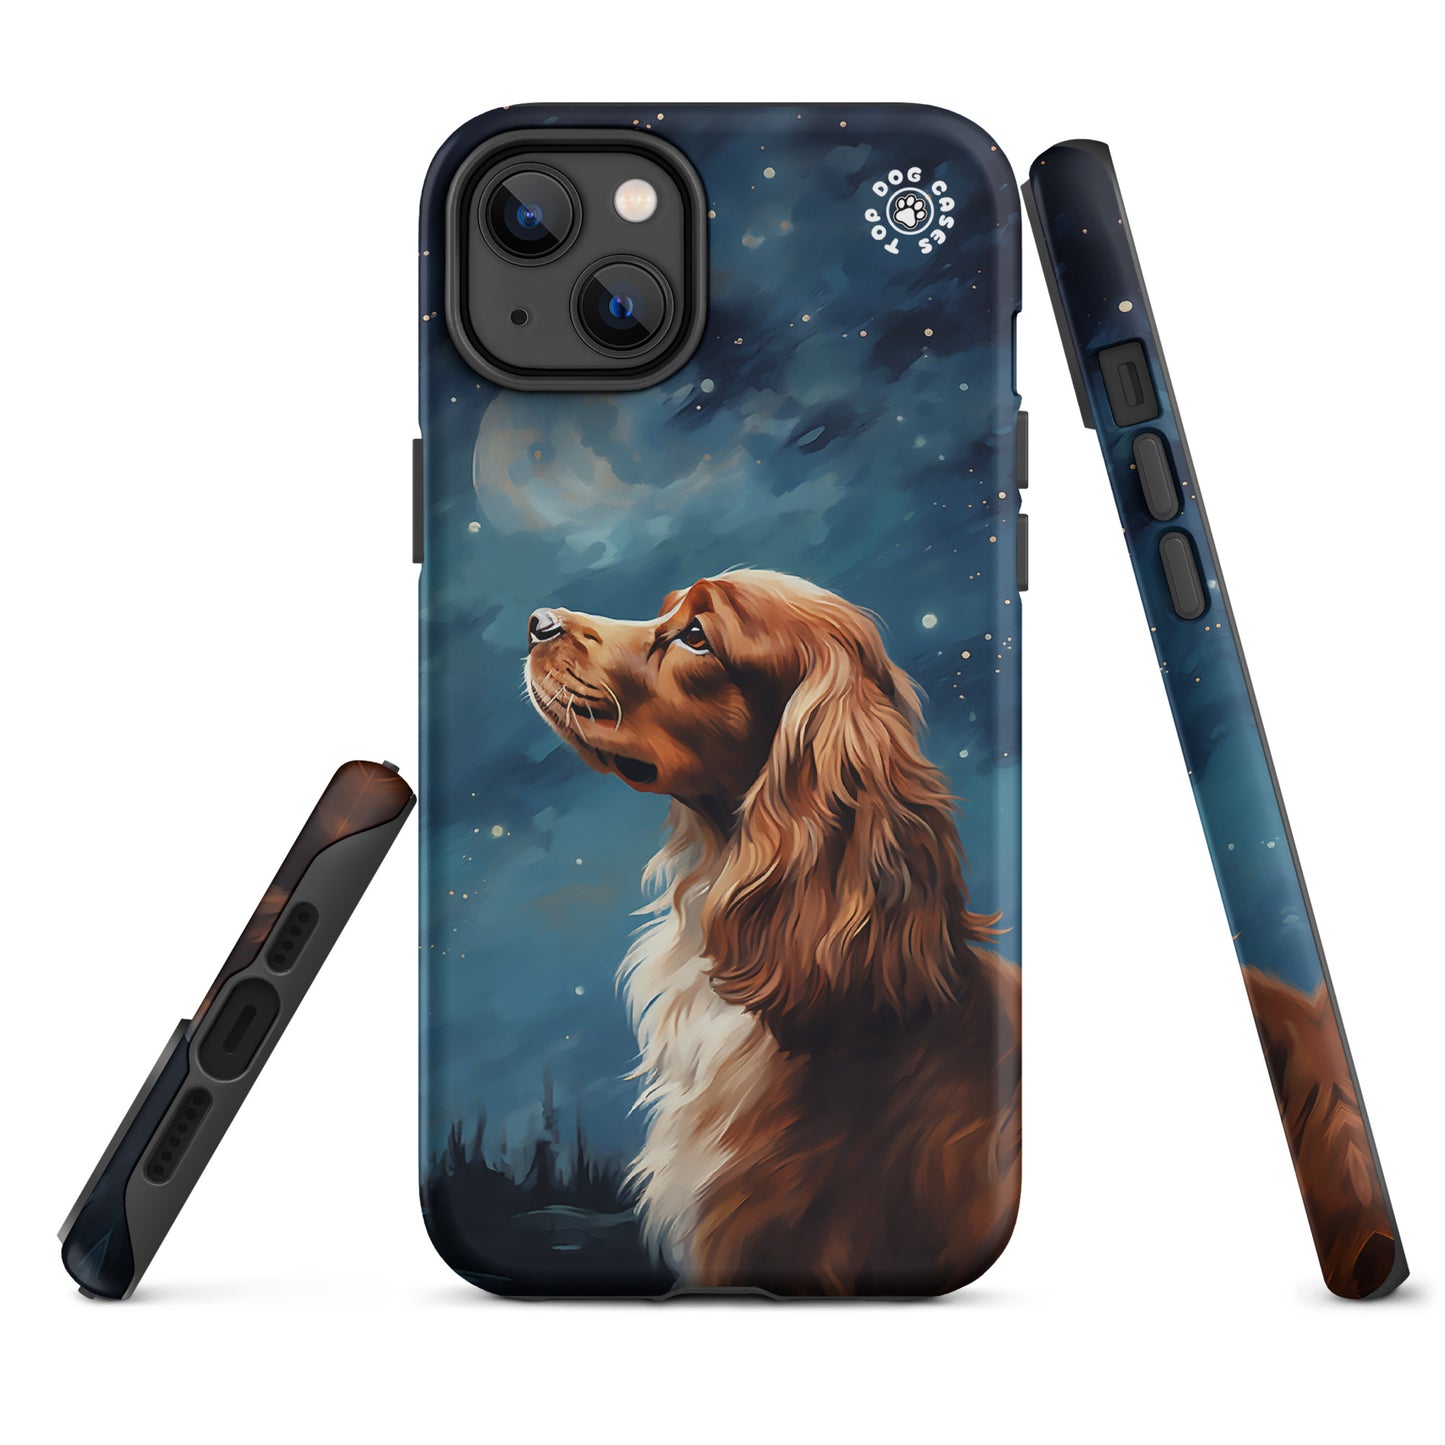 Cocker Spaniel - iPhone Case - Cute Phone Cases